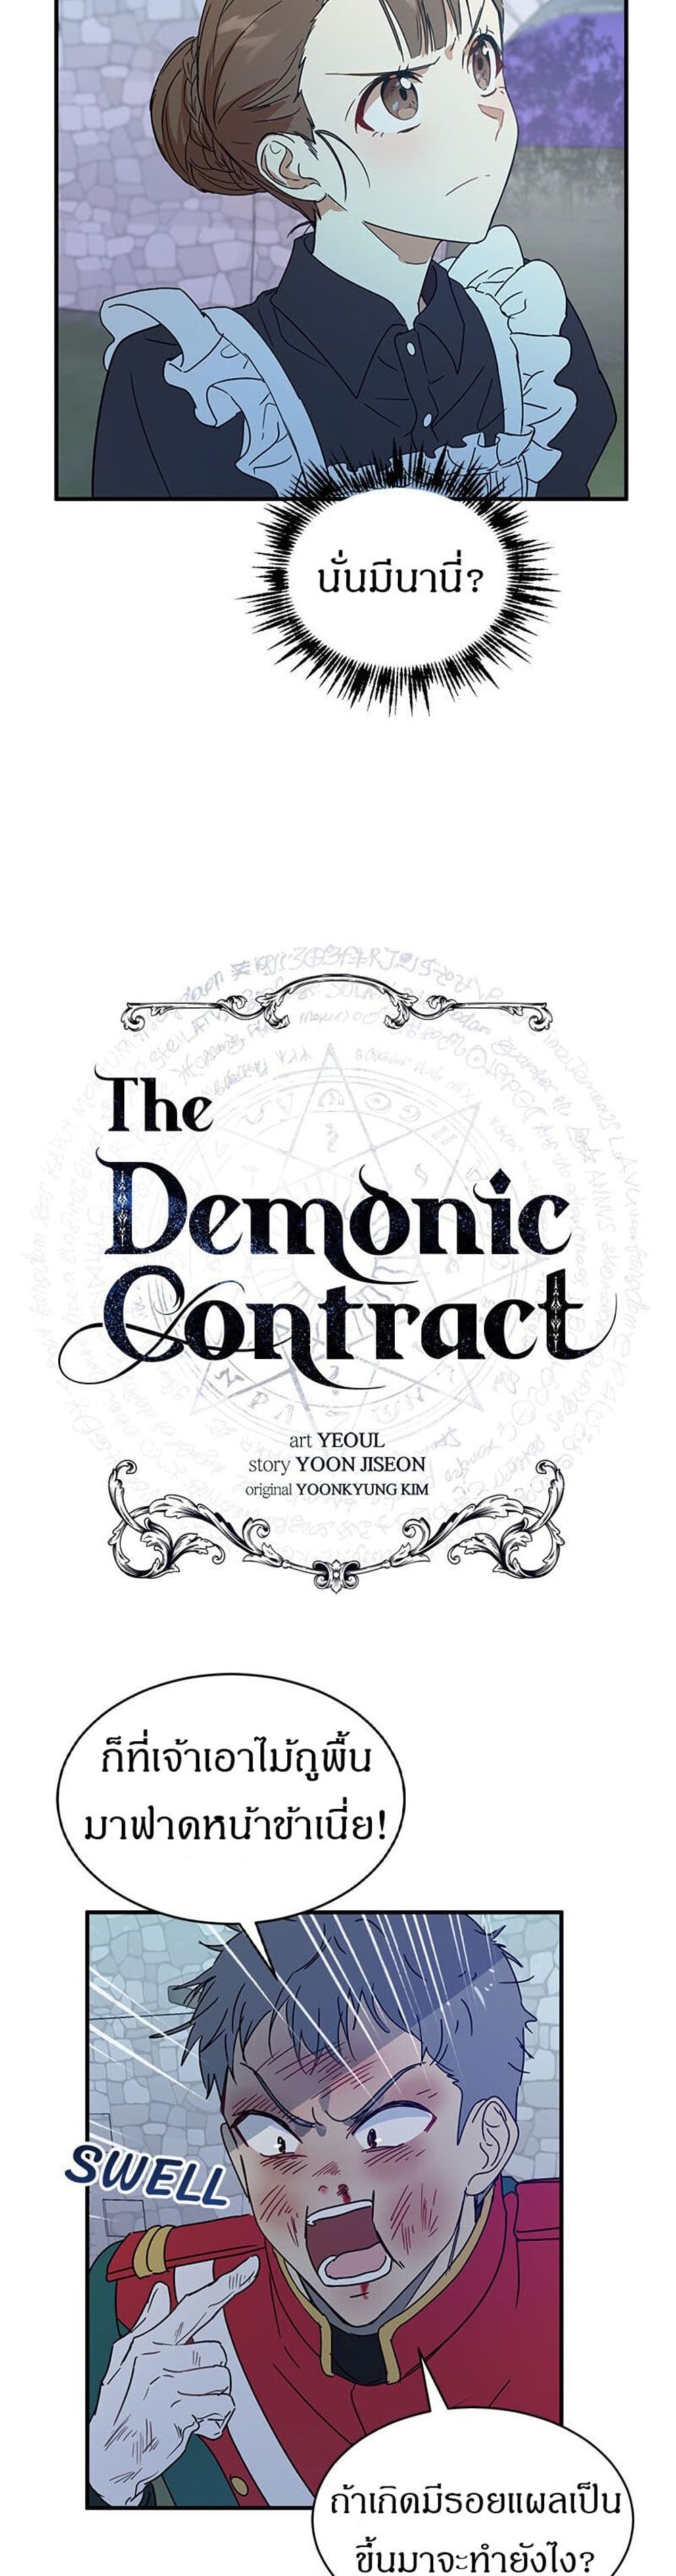 The Demonic Contract20 05